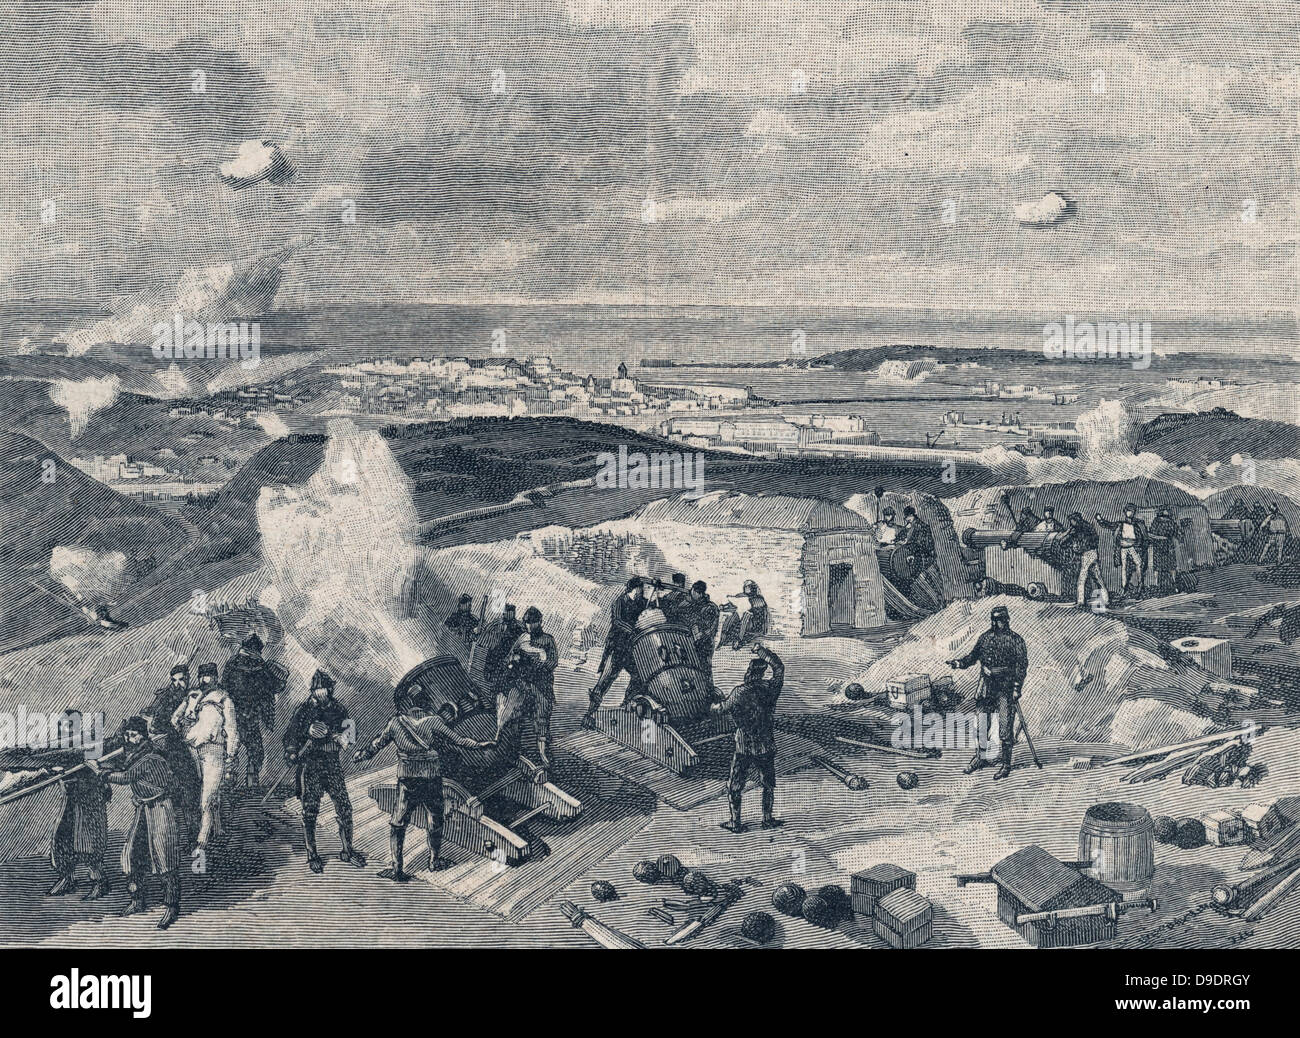 Crimean War 1853-1856:  Siege of Sebastopol - mortars and cannon used to bombard Russians 1854-1855. Stock Photo